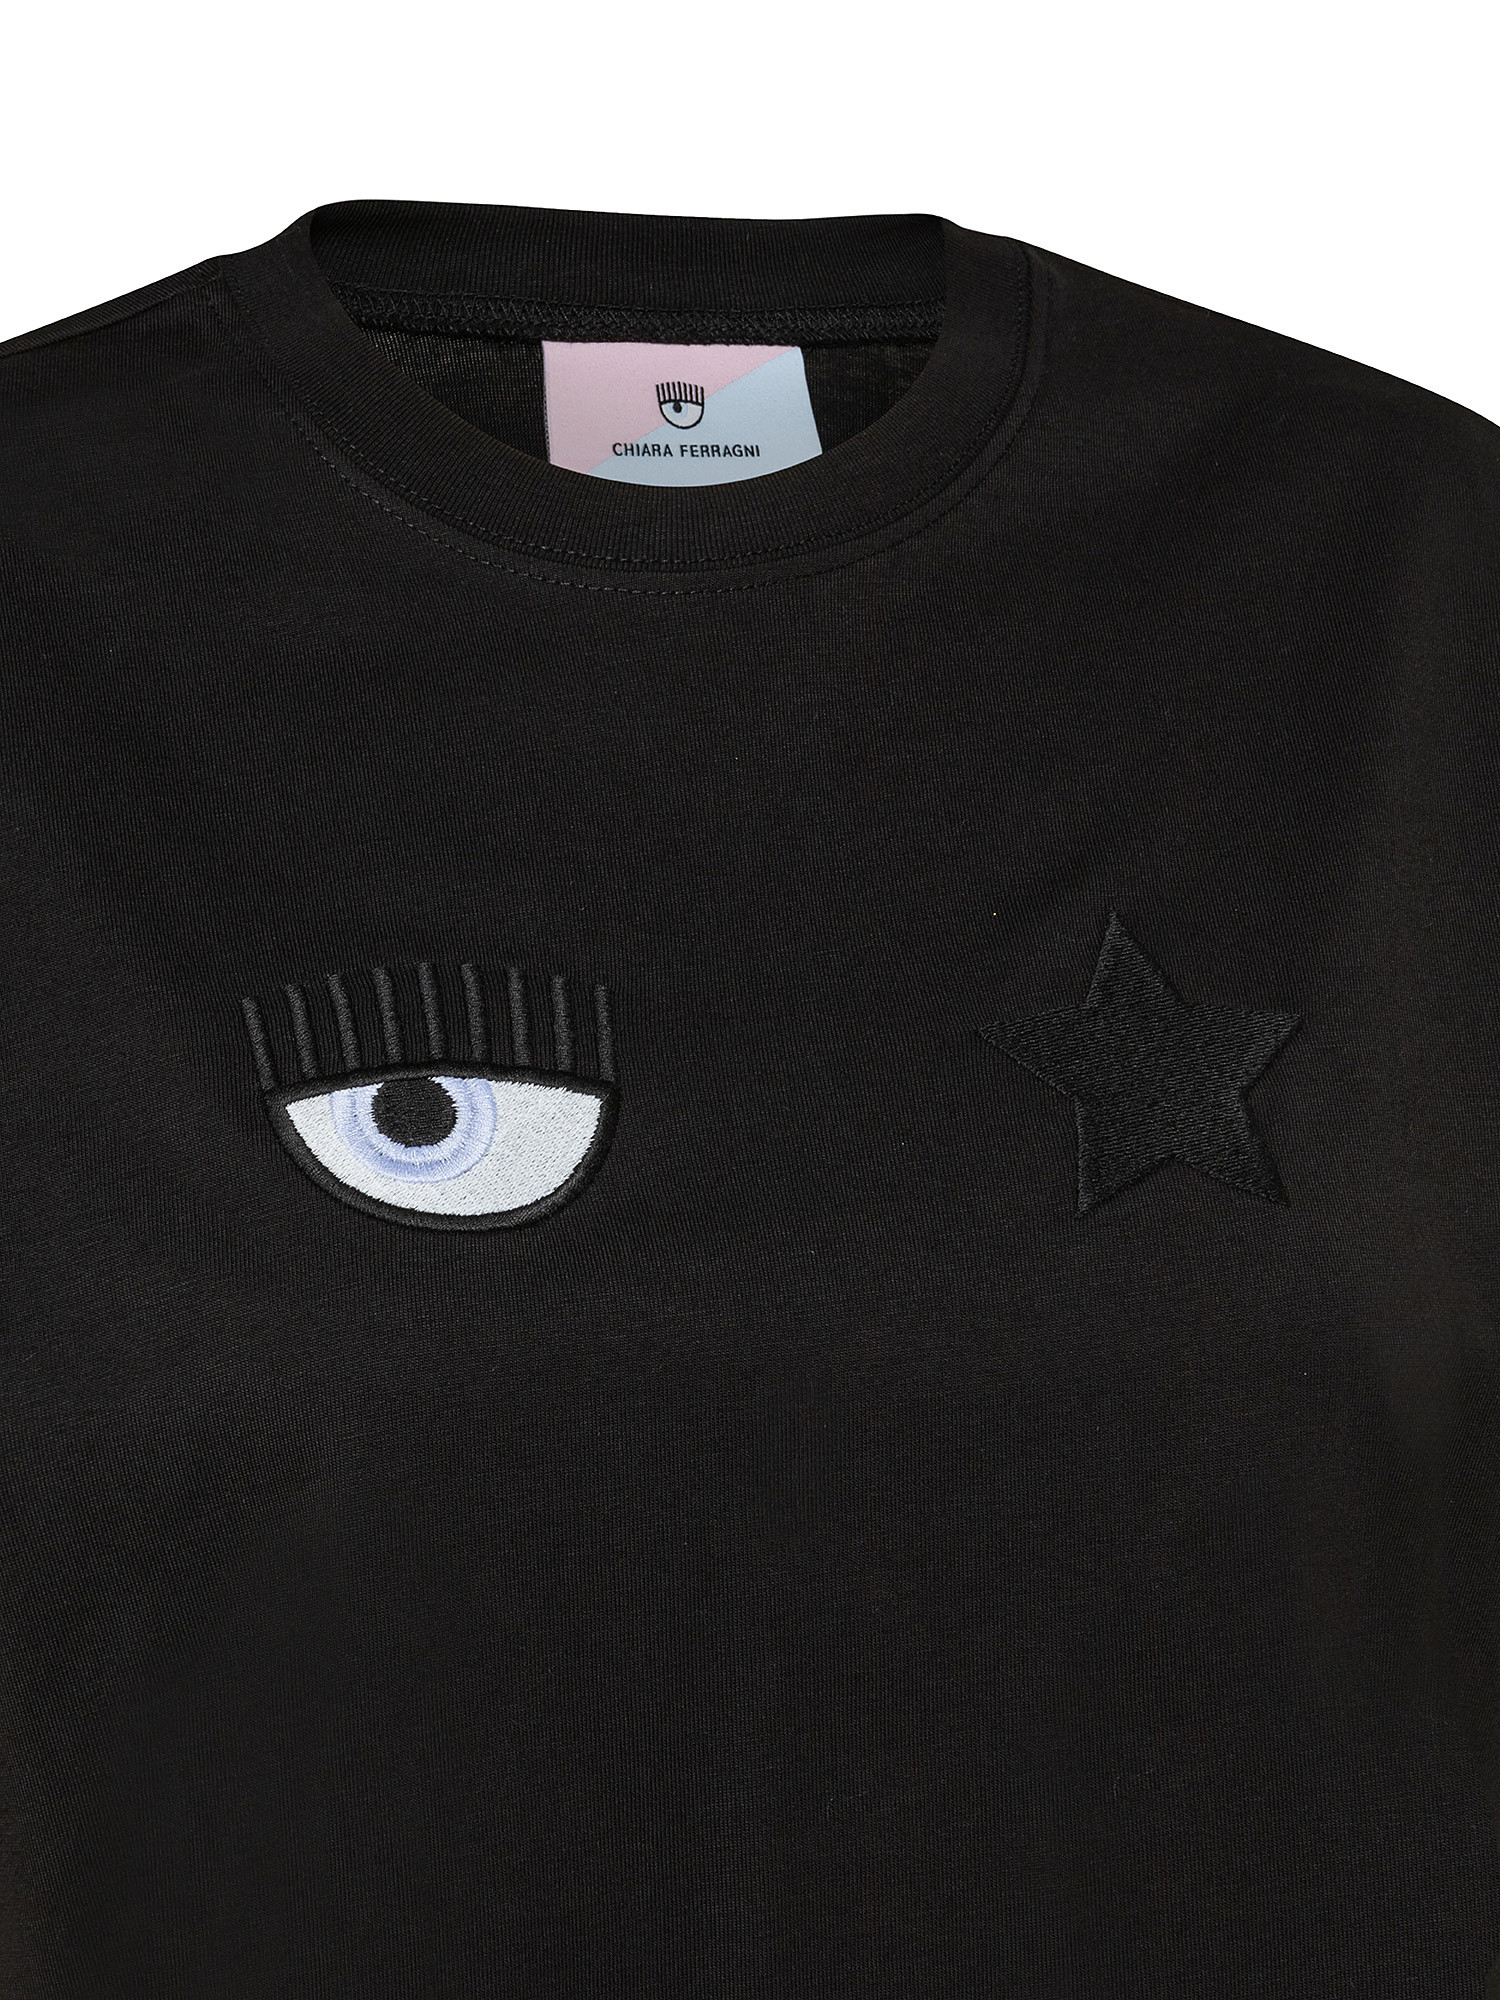 Eye Star T-shirt, Black, large image number 2